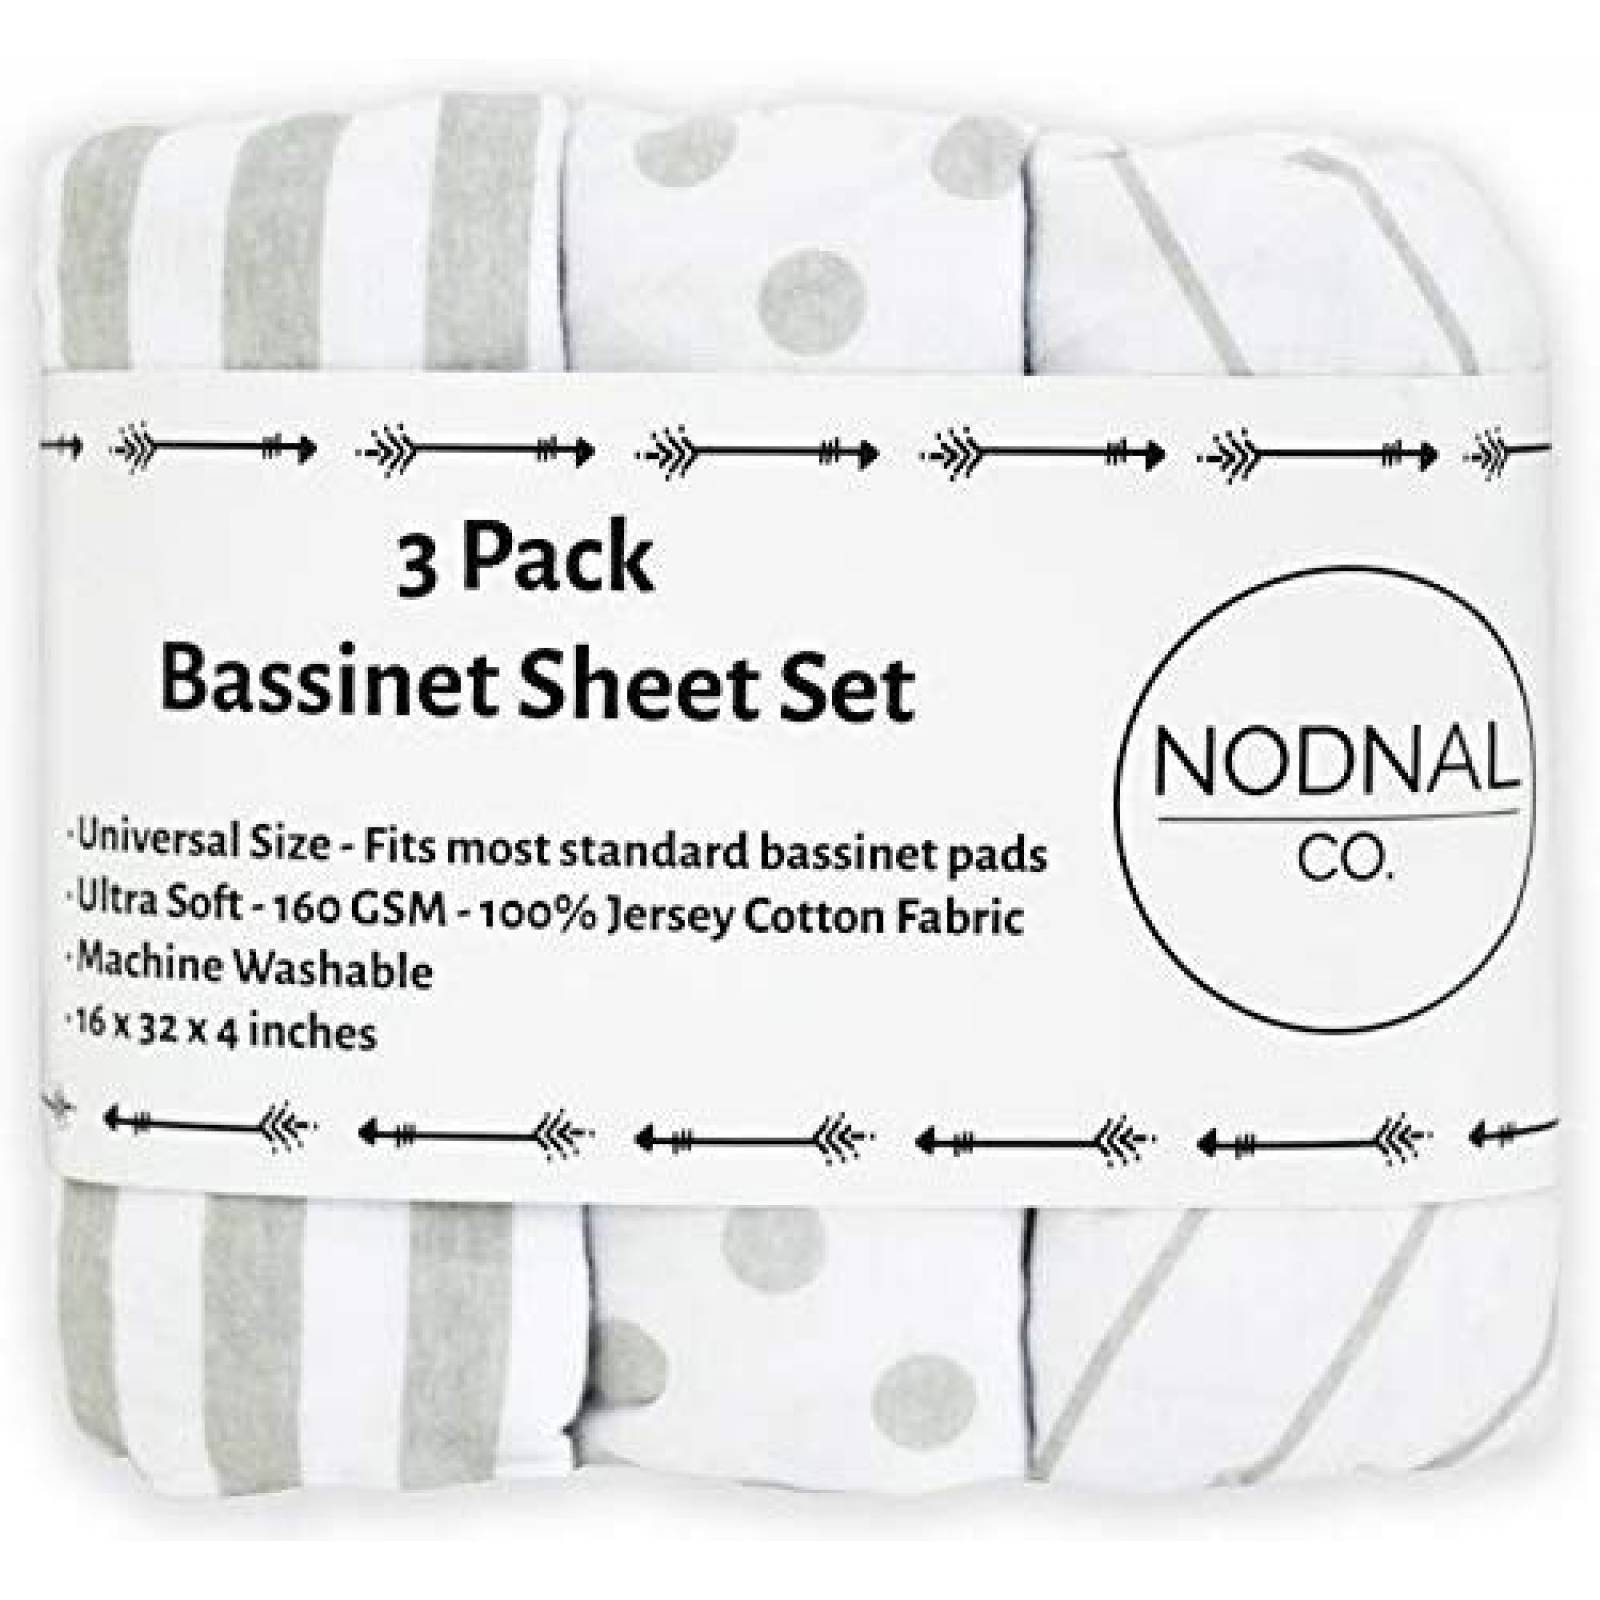 Juego de sábanas NODNAL CO. 3 unidades 100 % algodón -gris